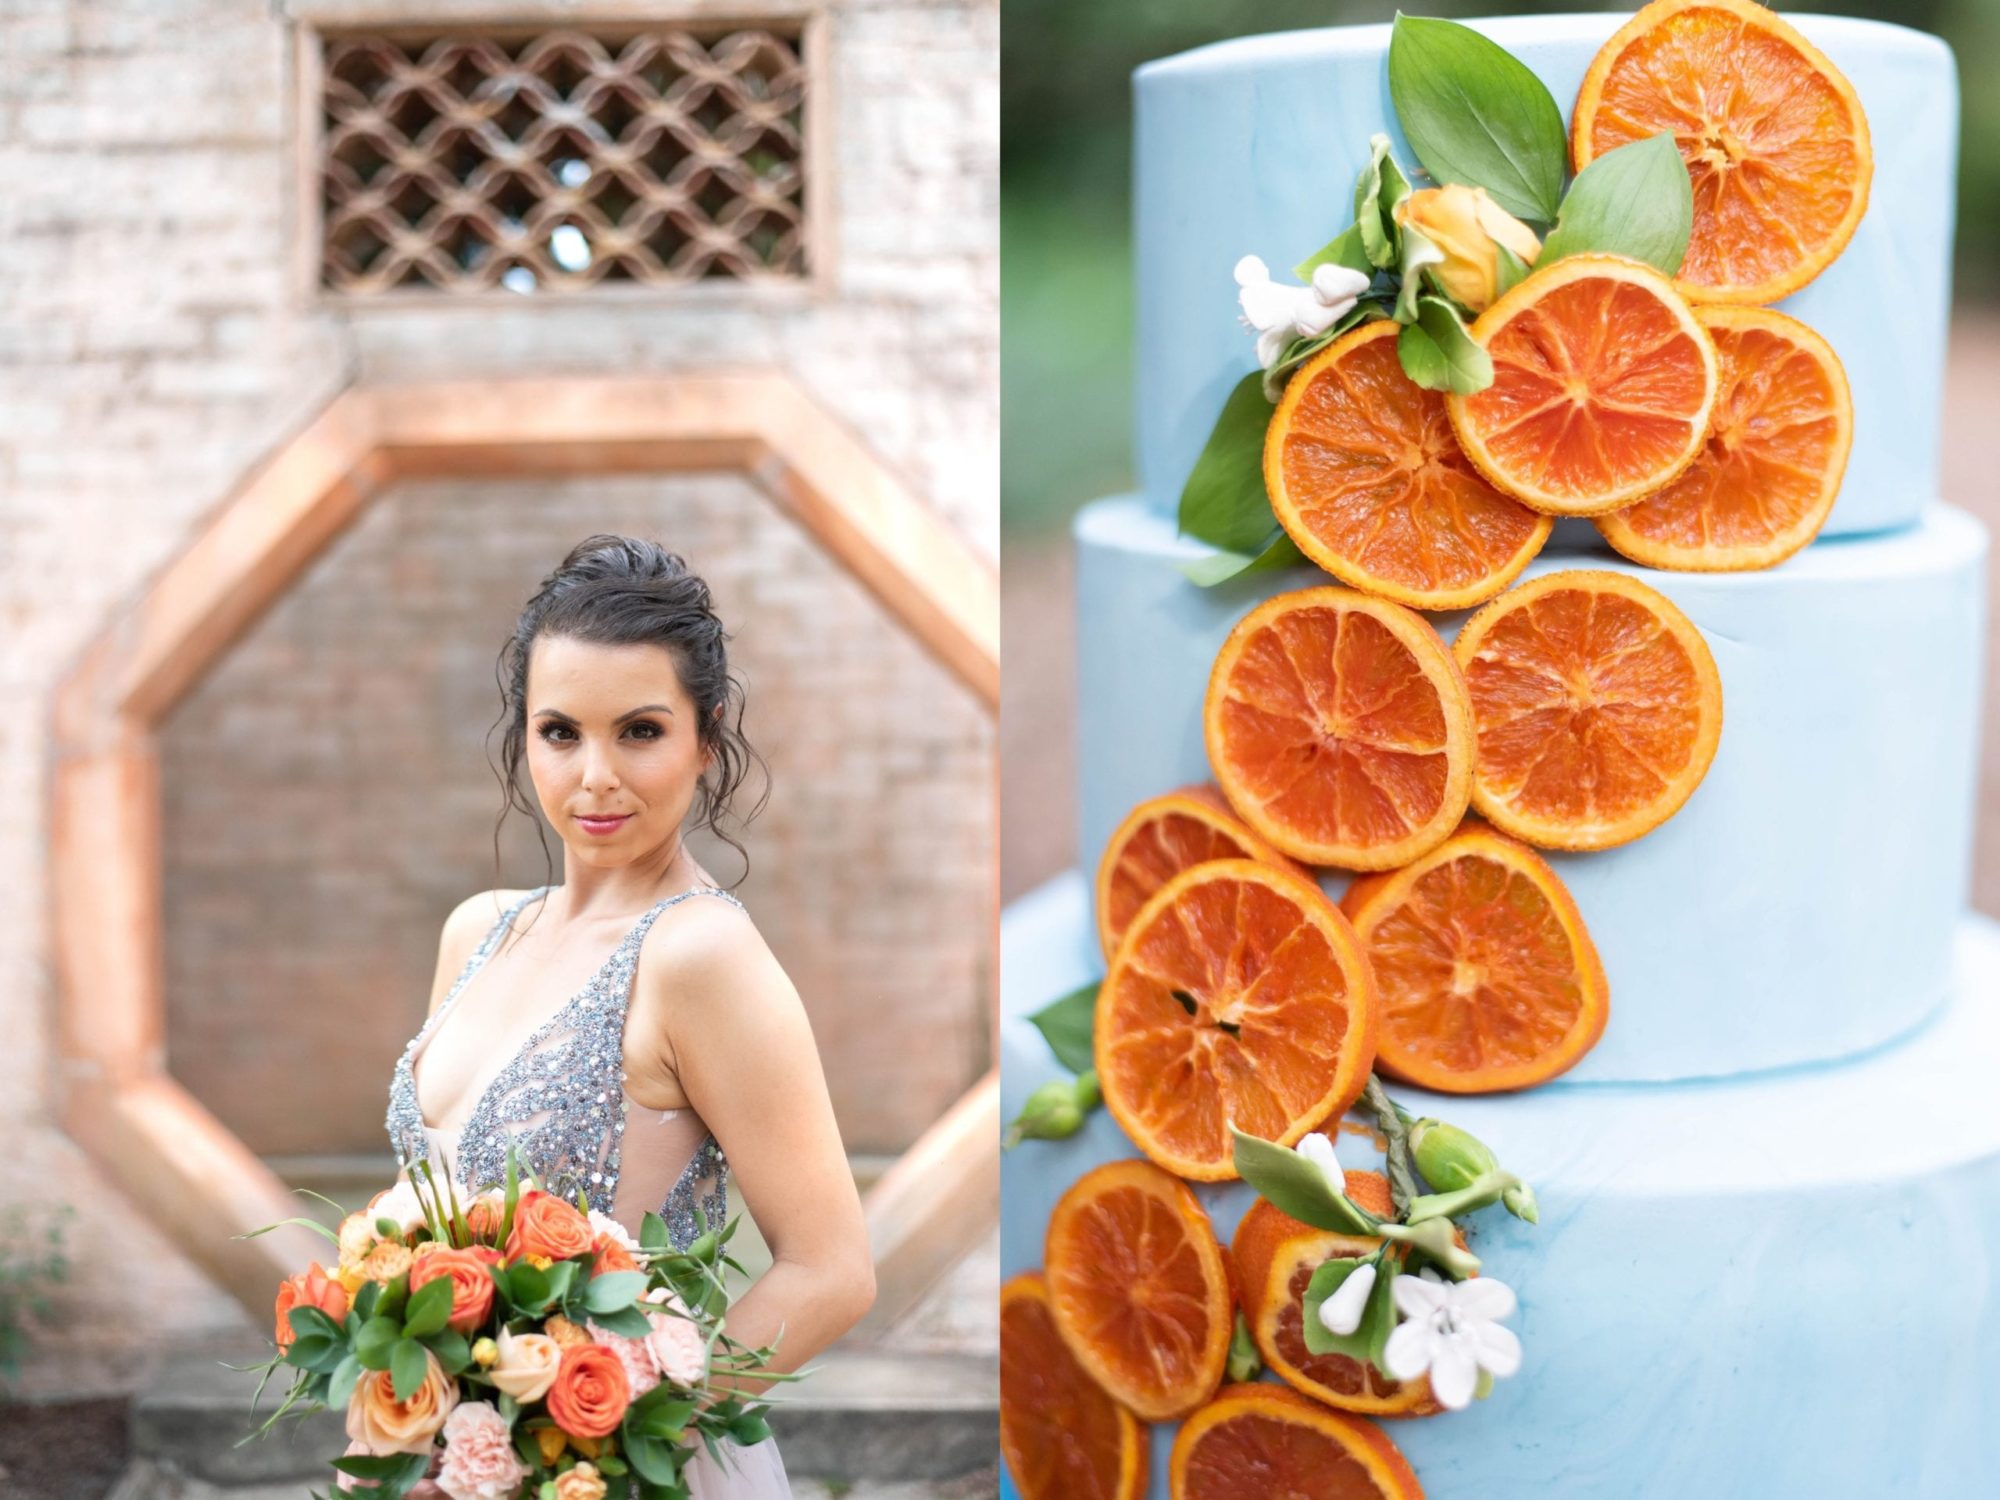 Bok tower gardens venue citrus styled shoot blue fondant cake with orange slices